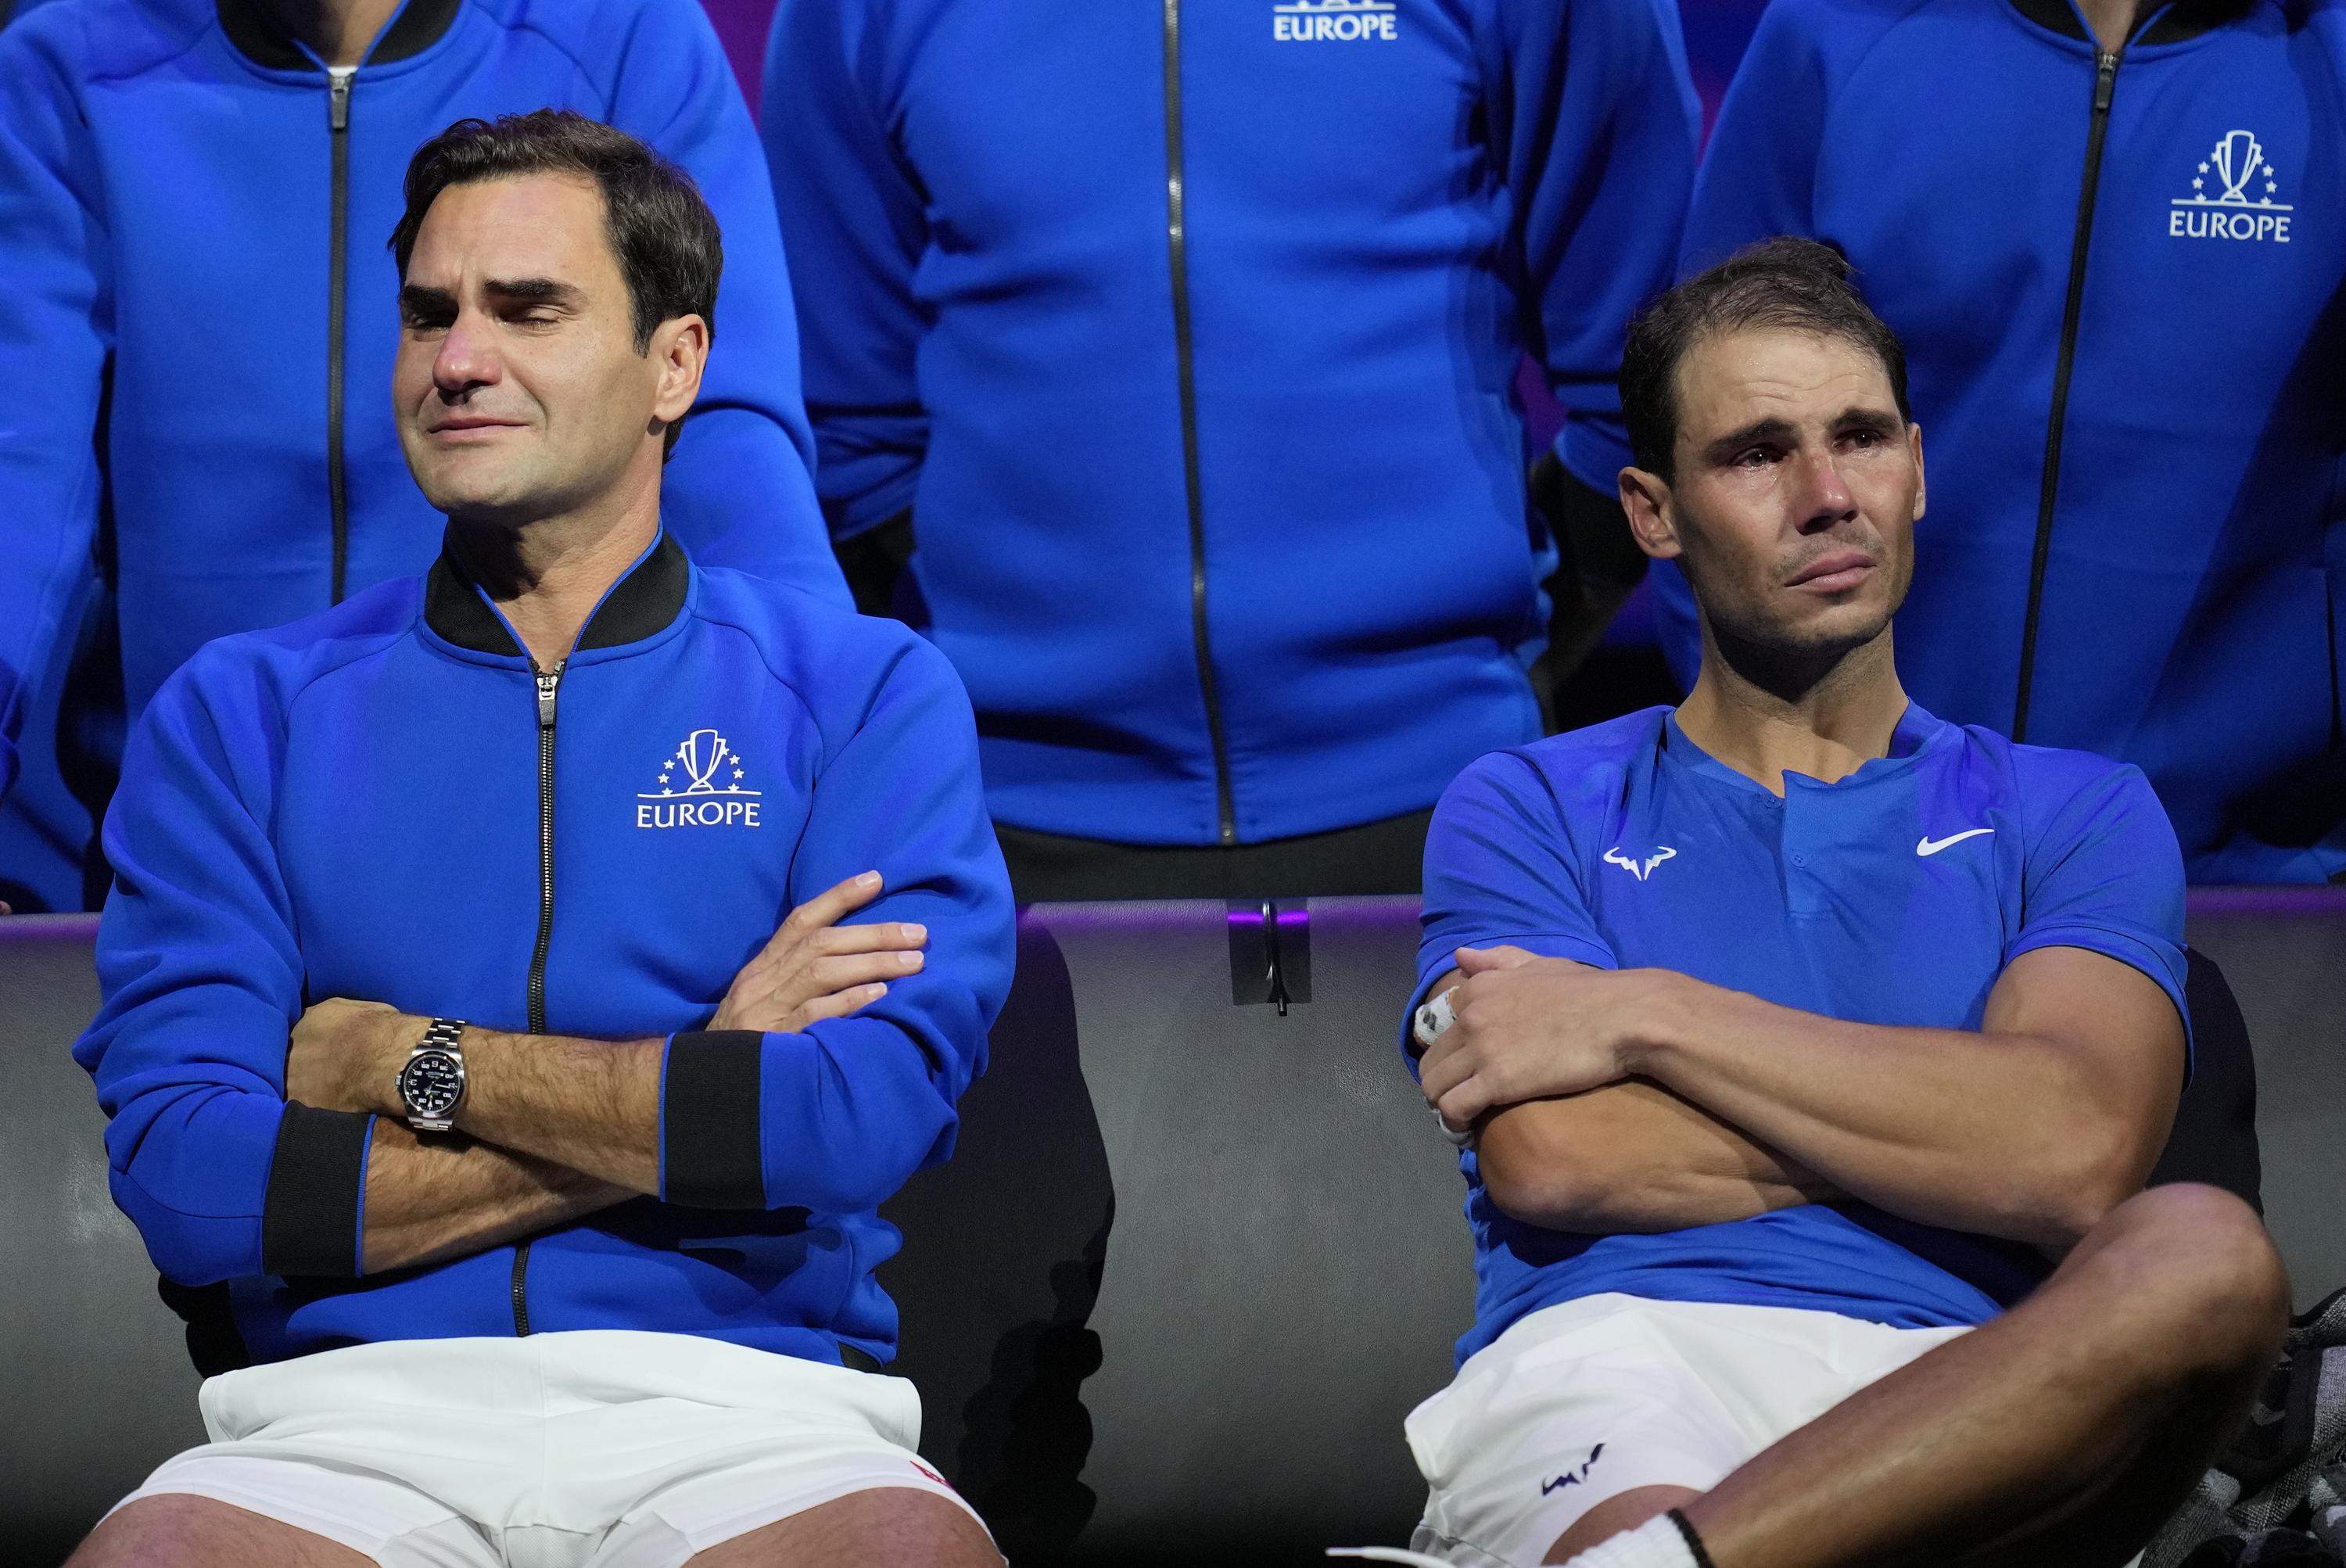 Roger Federer retires after teaming with Nadal in last match | AP News